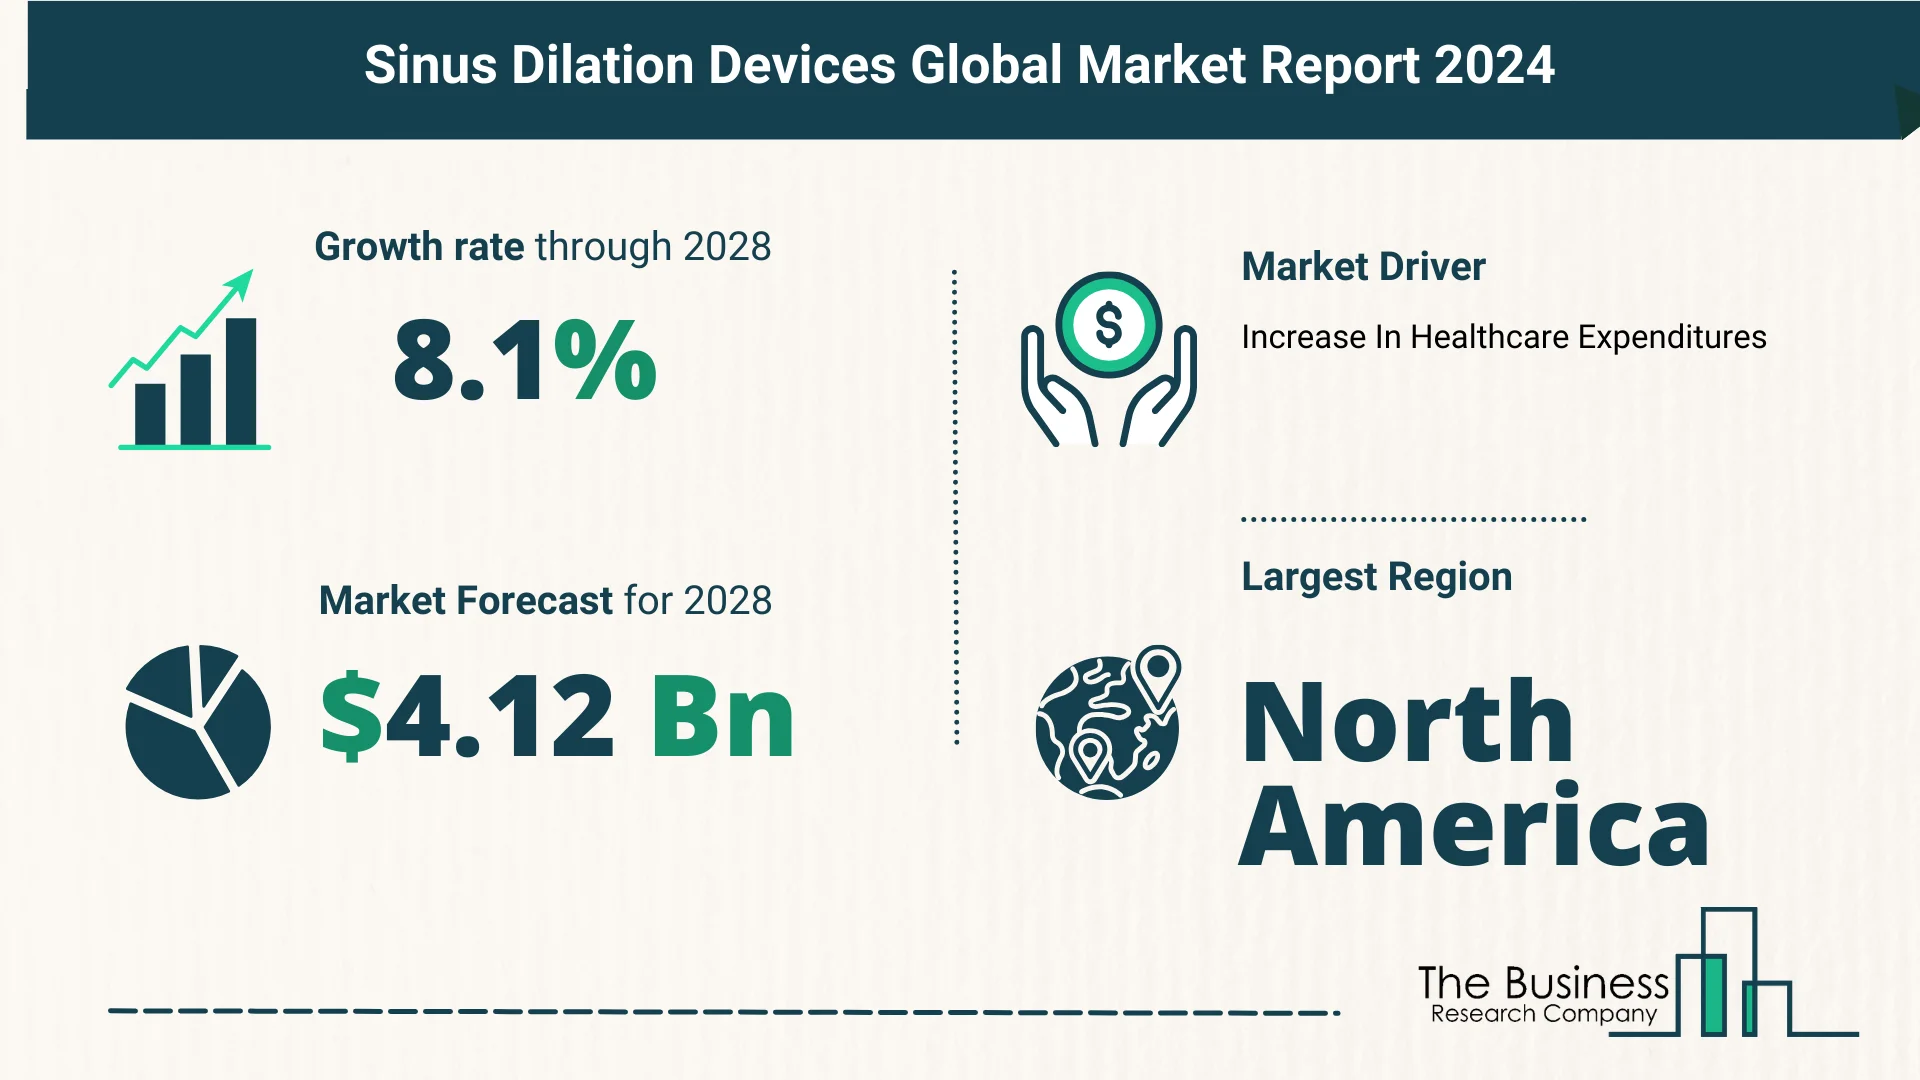 Global Sinus Dilation Devices Market